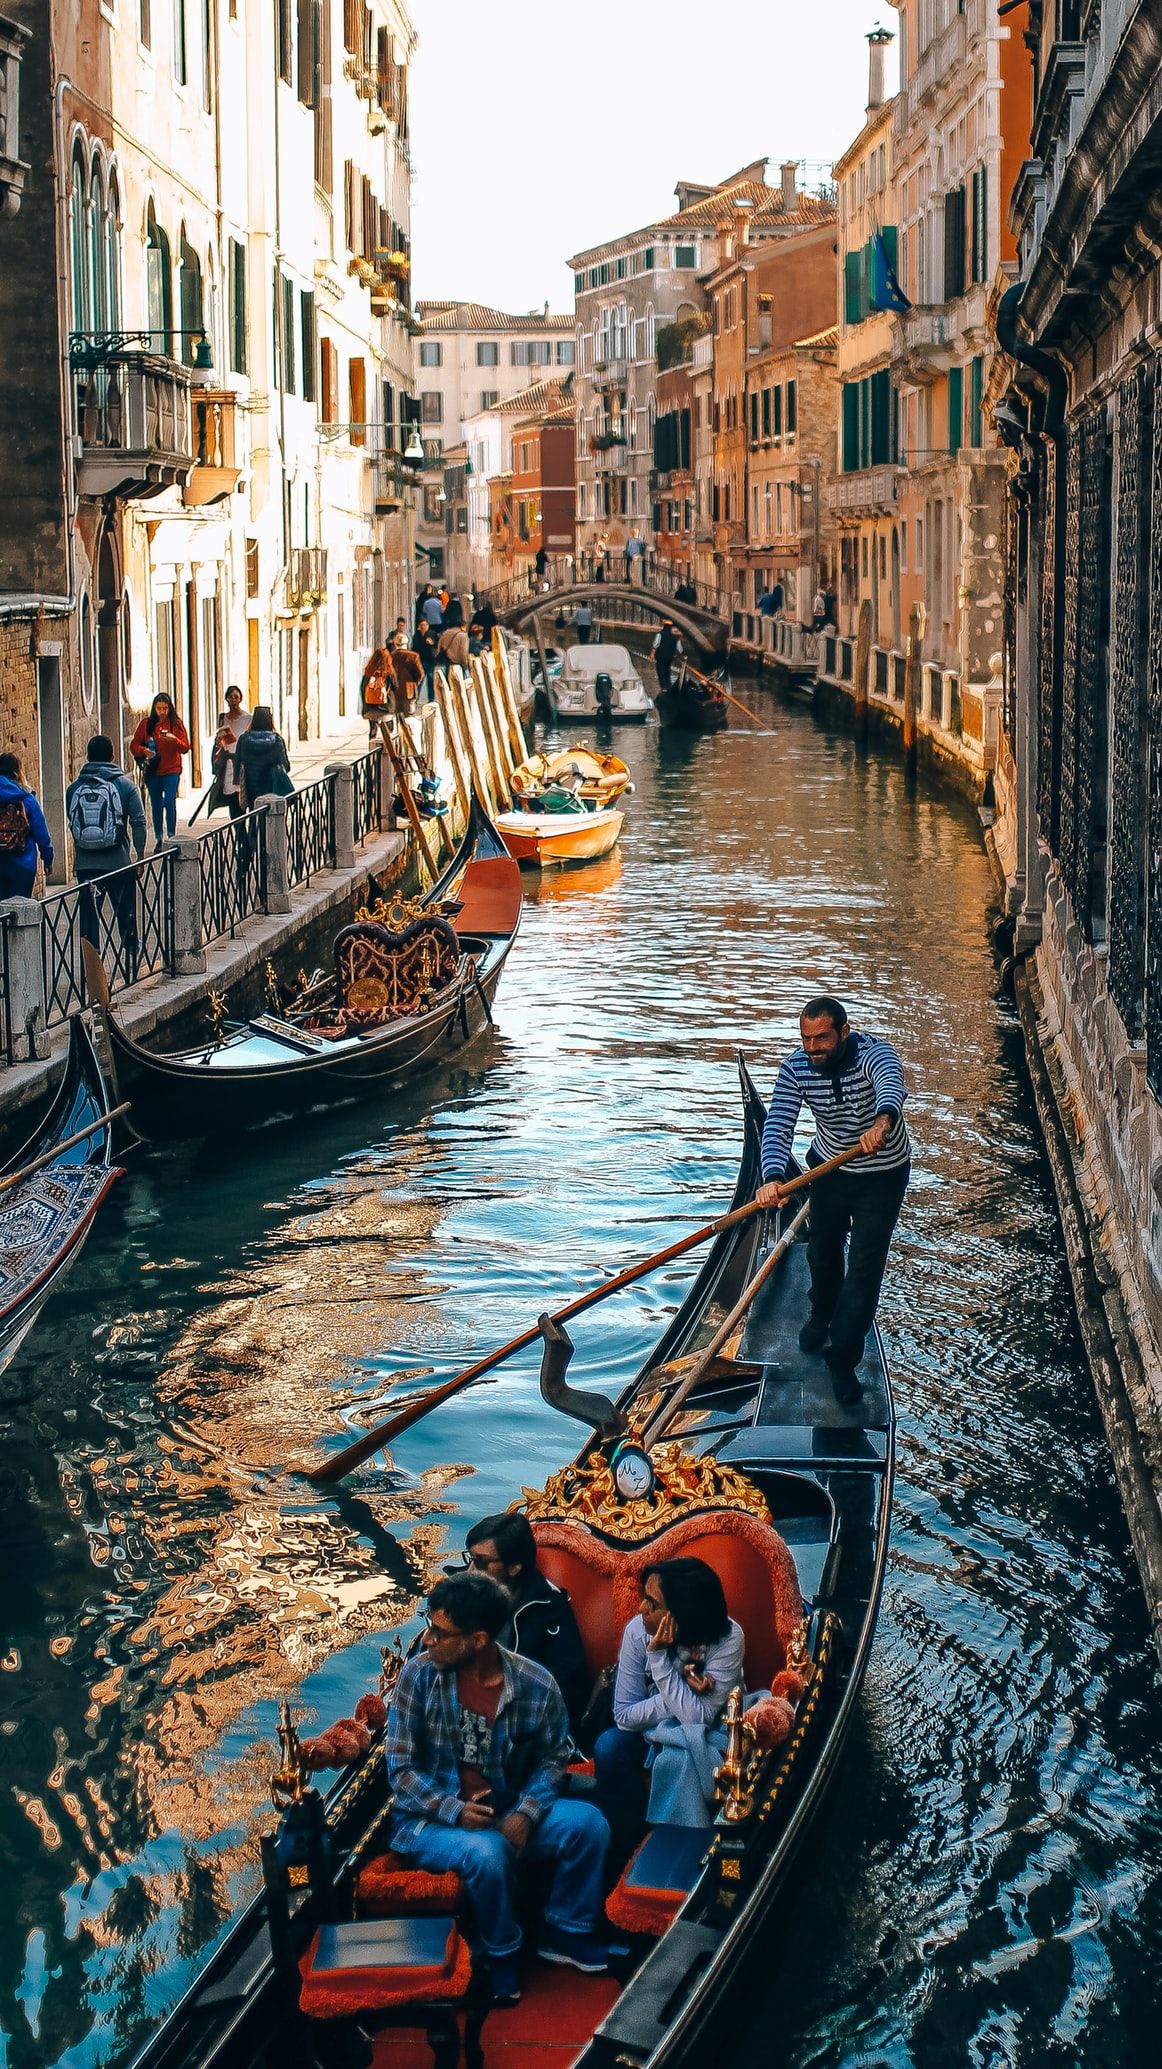 Venice or Sardinia? #Italy is full of surprises